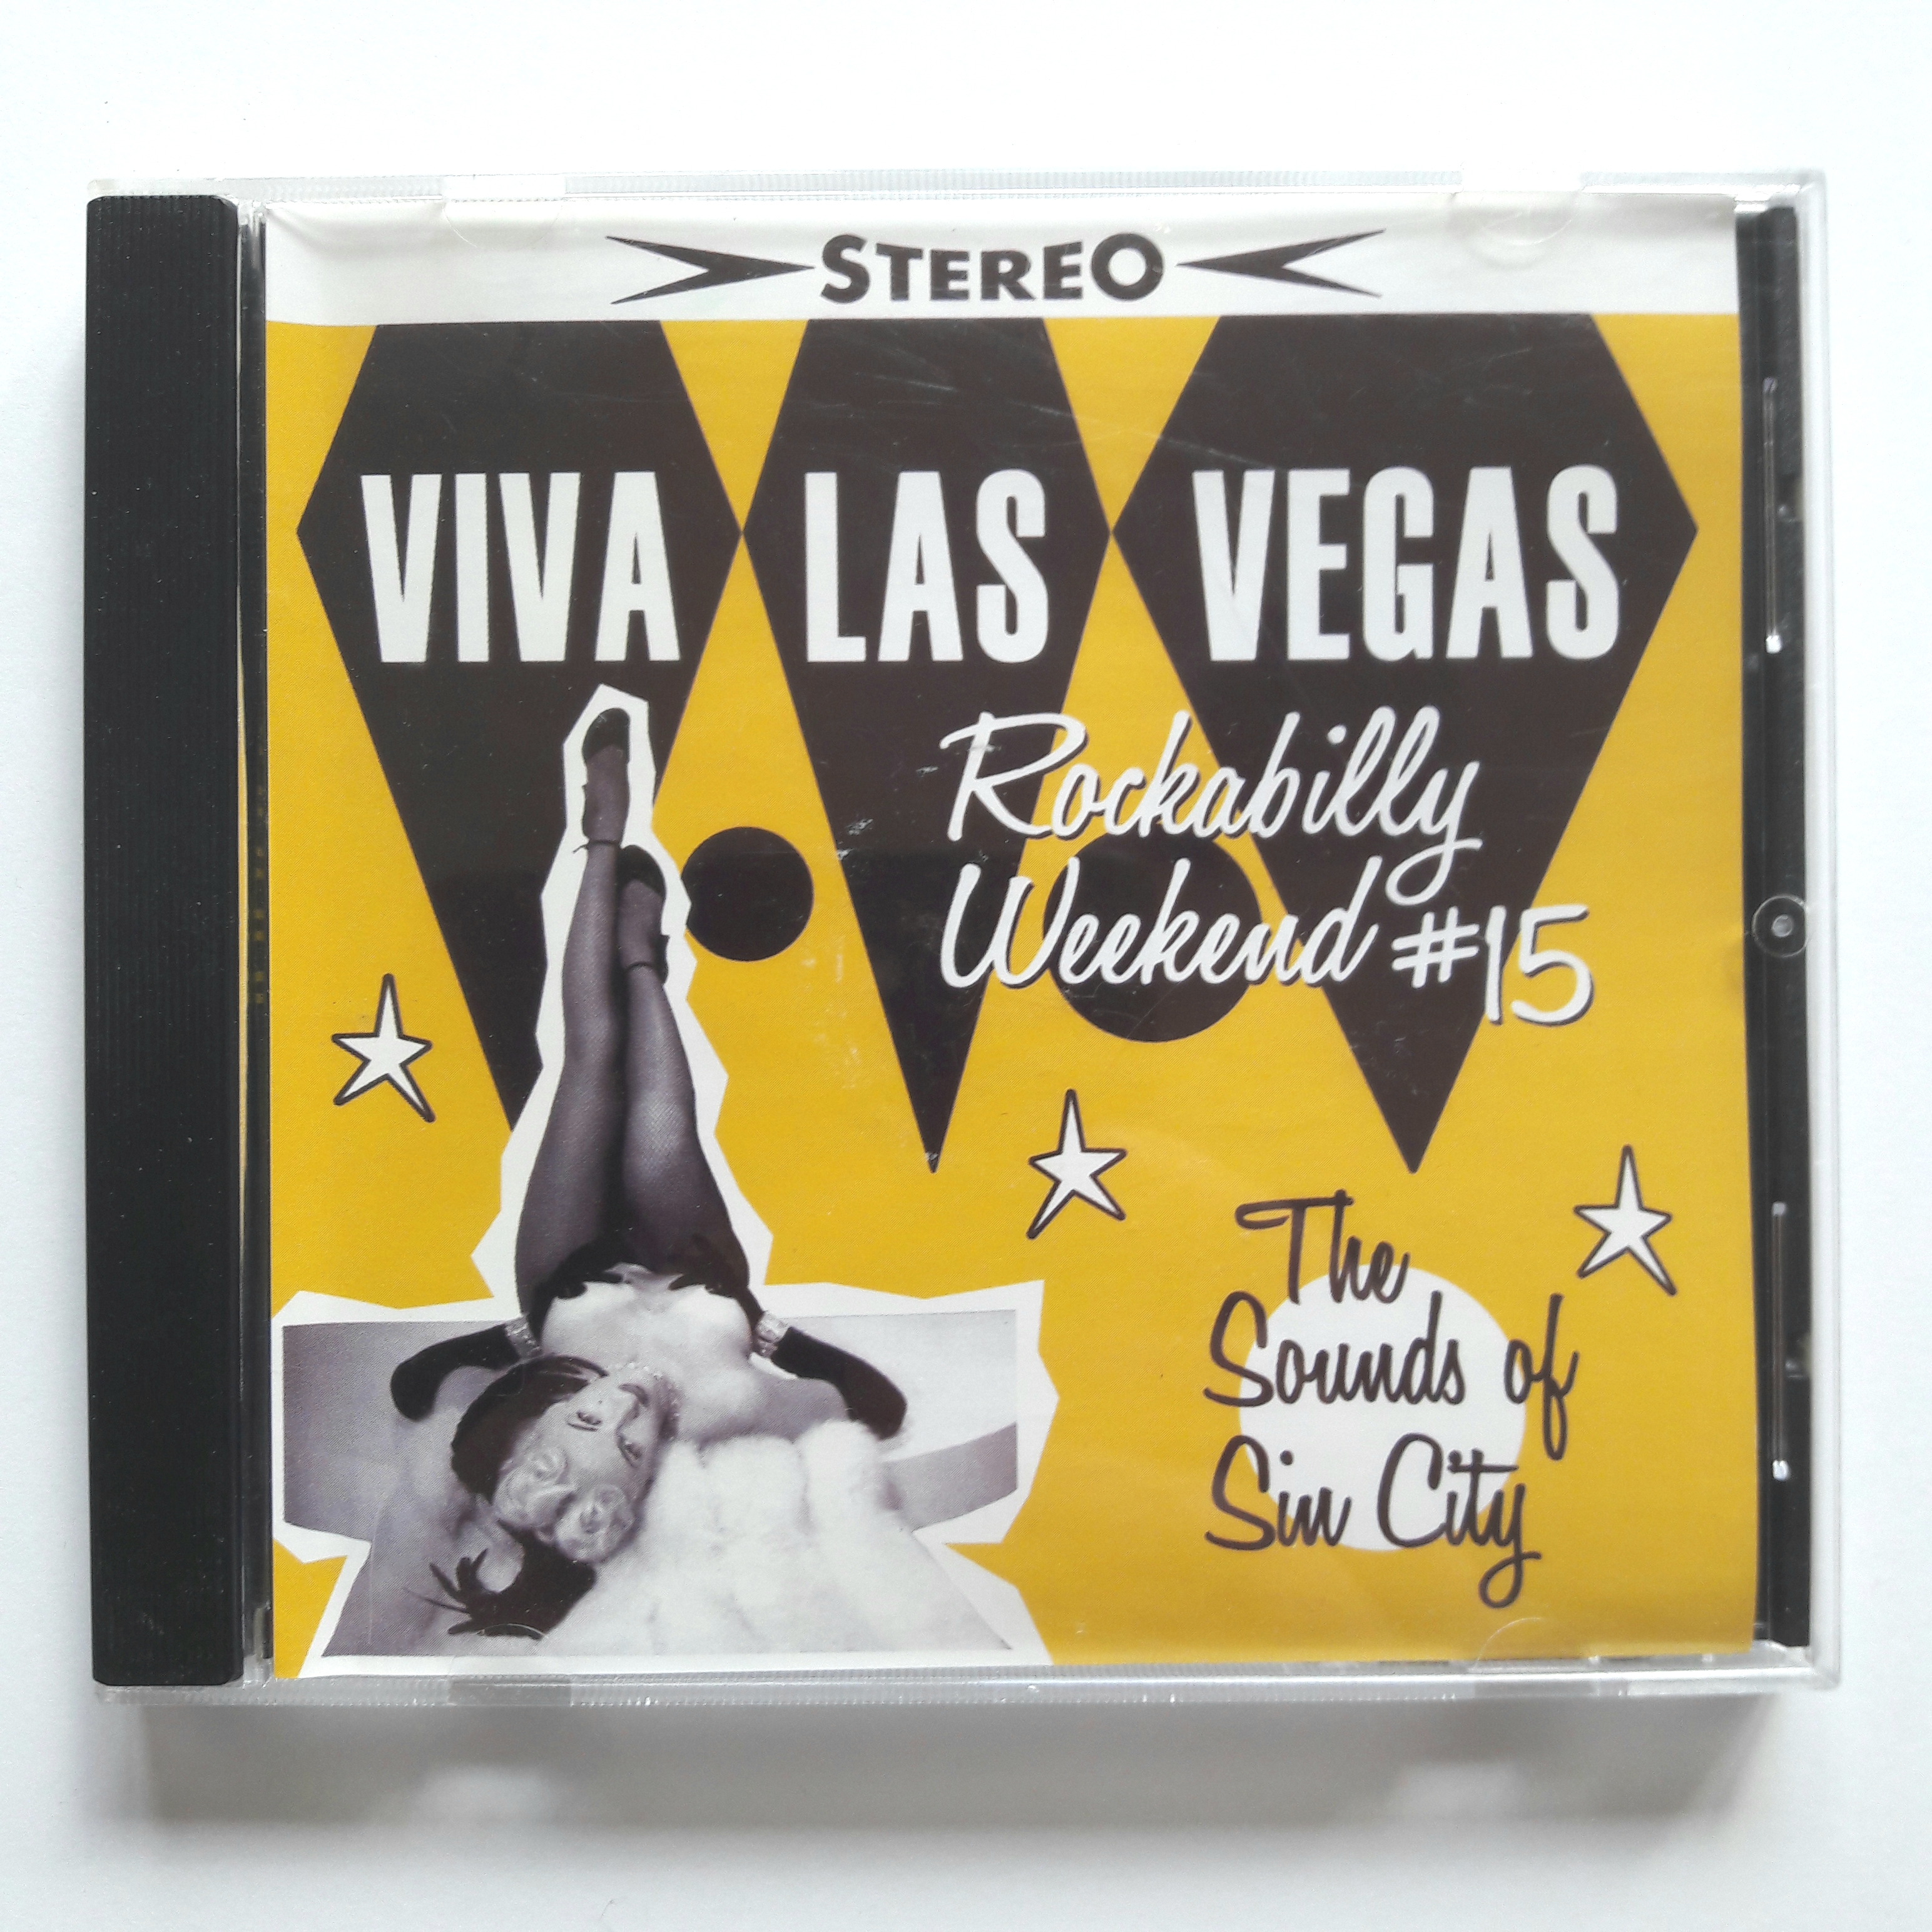 Viva Las Vegas - Rockabilly Weekend # 15